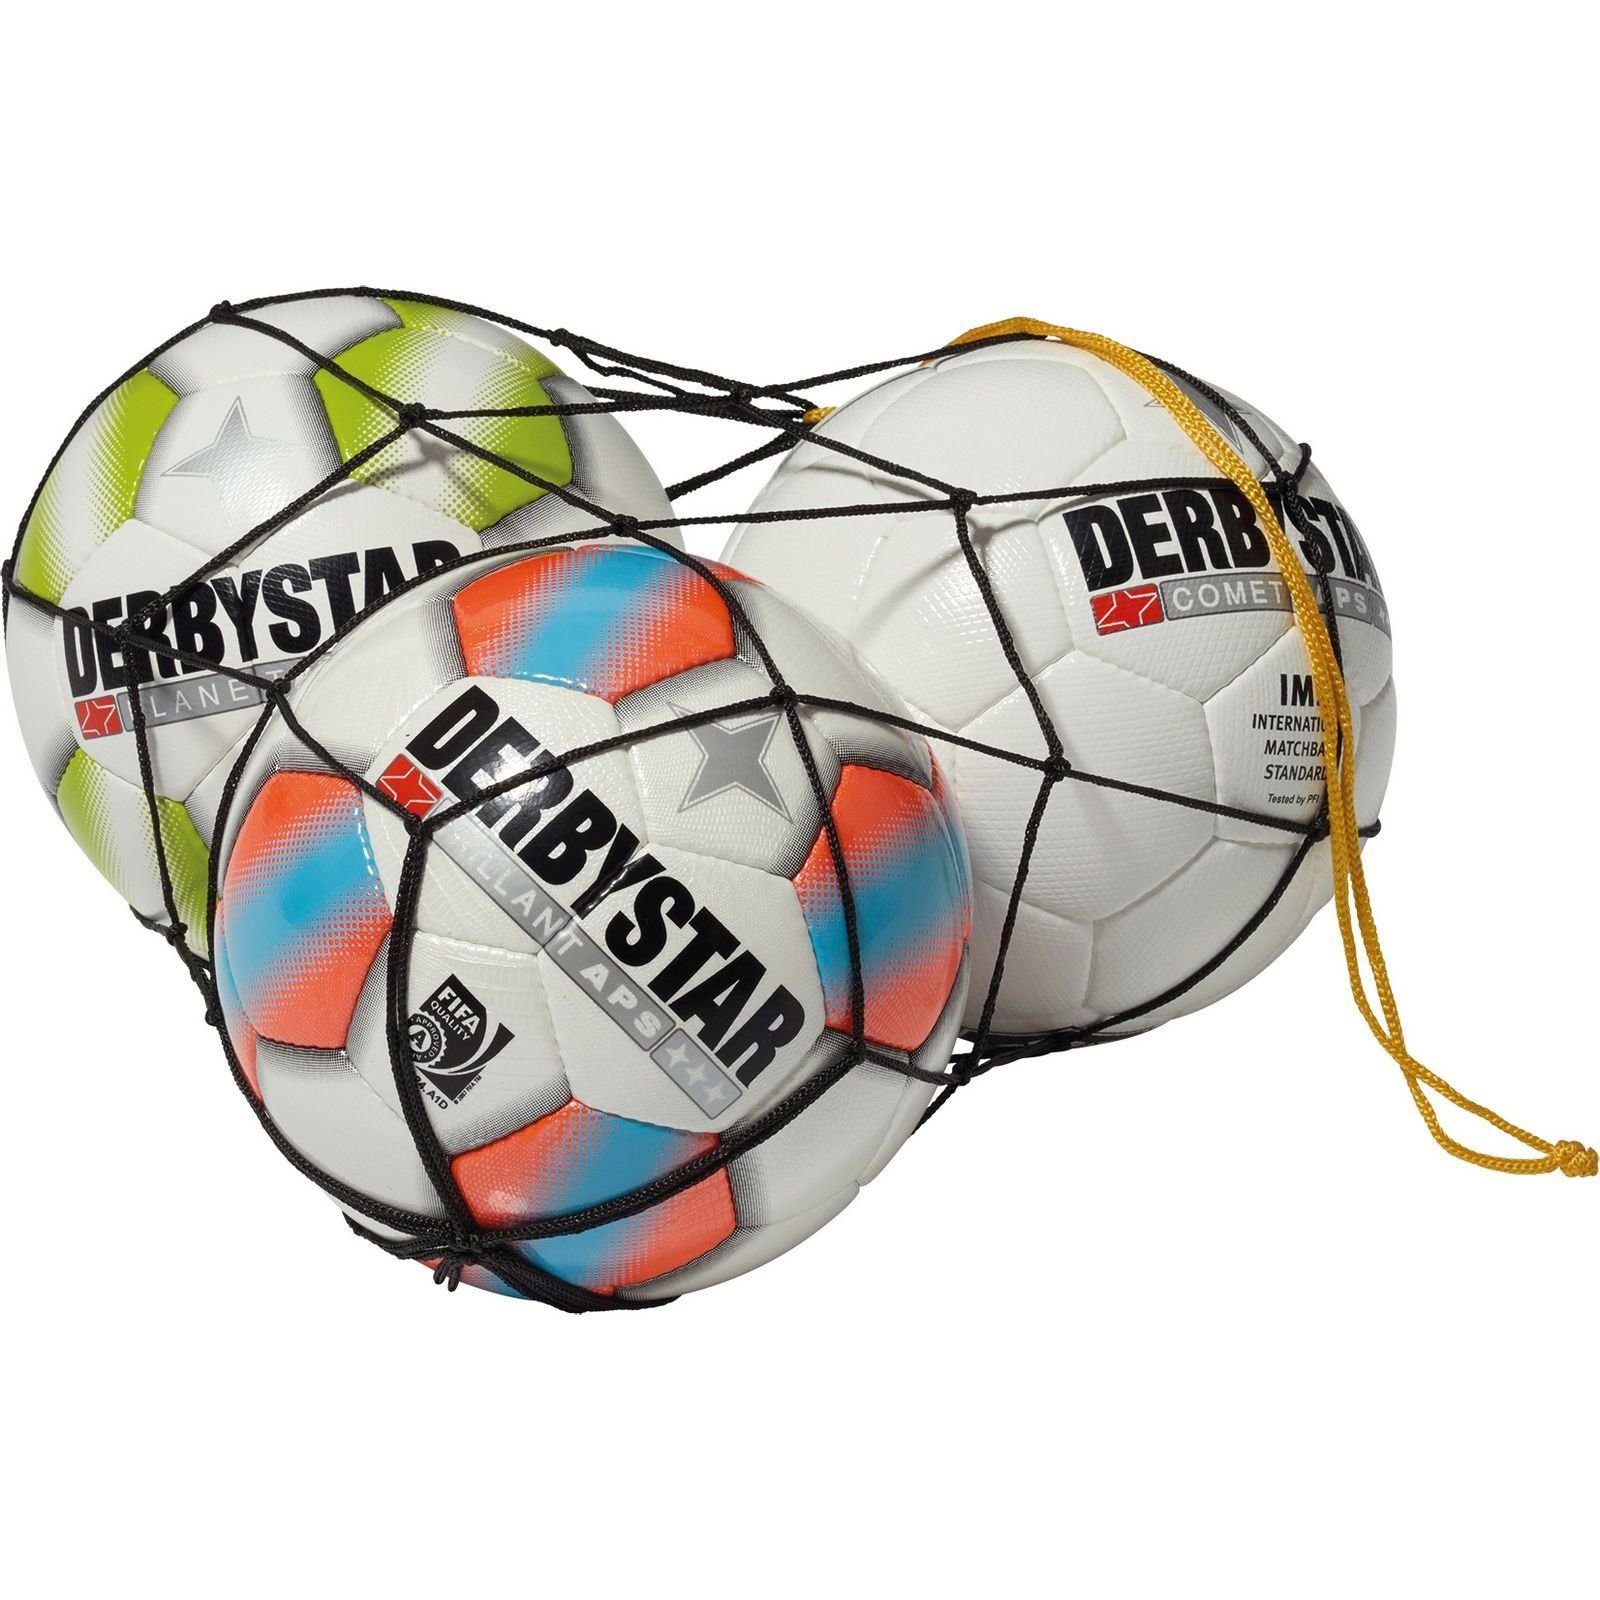 Ballnetz Polyester, Basketballnetz für Fußbälle Derbystar